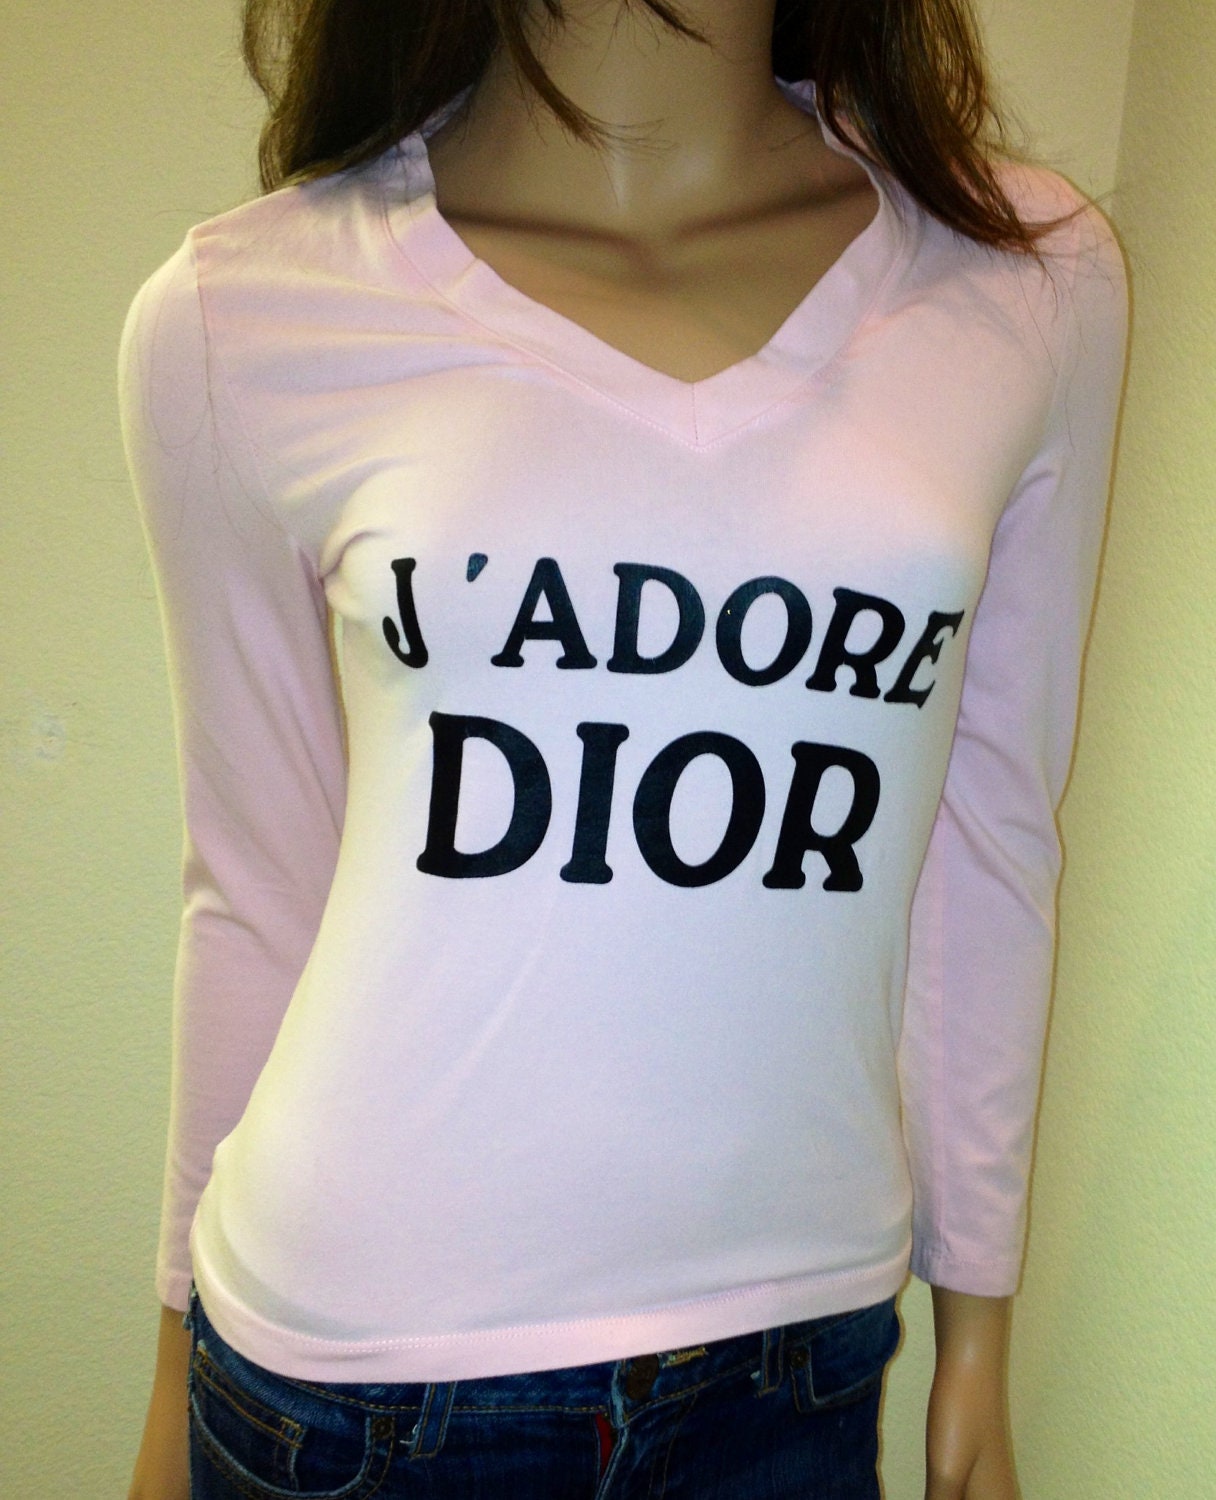 dior t shirt